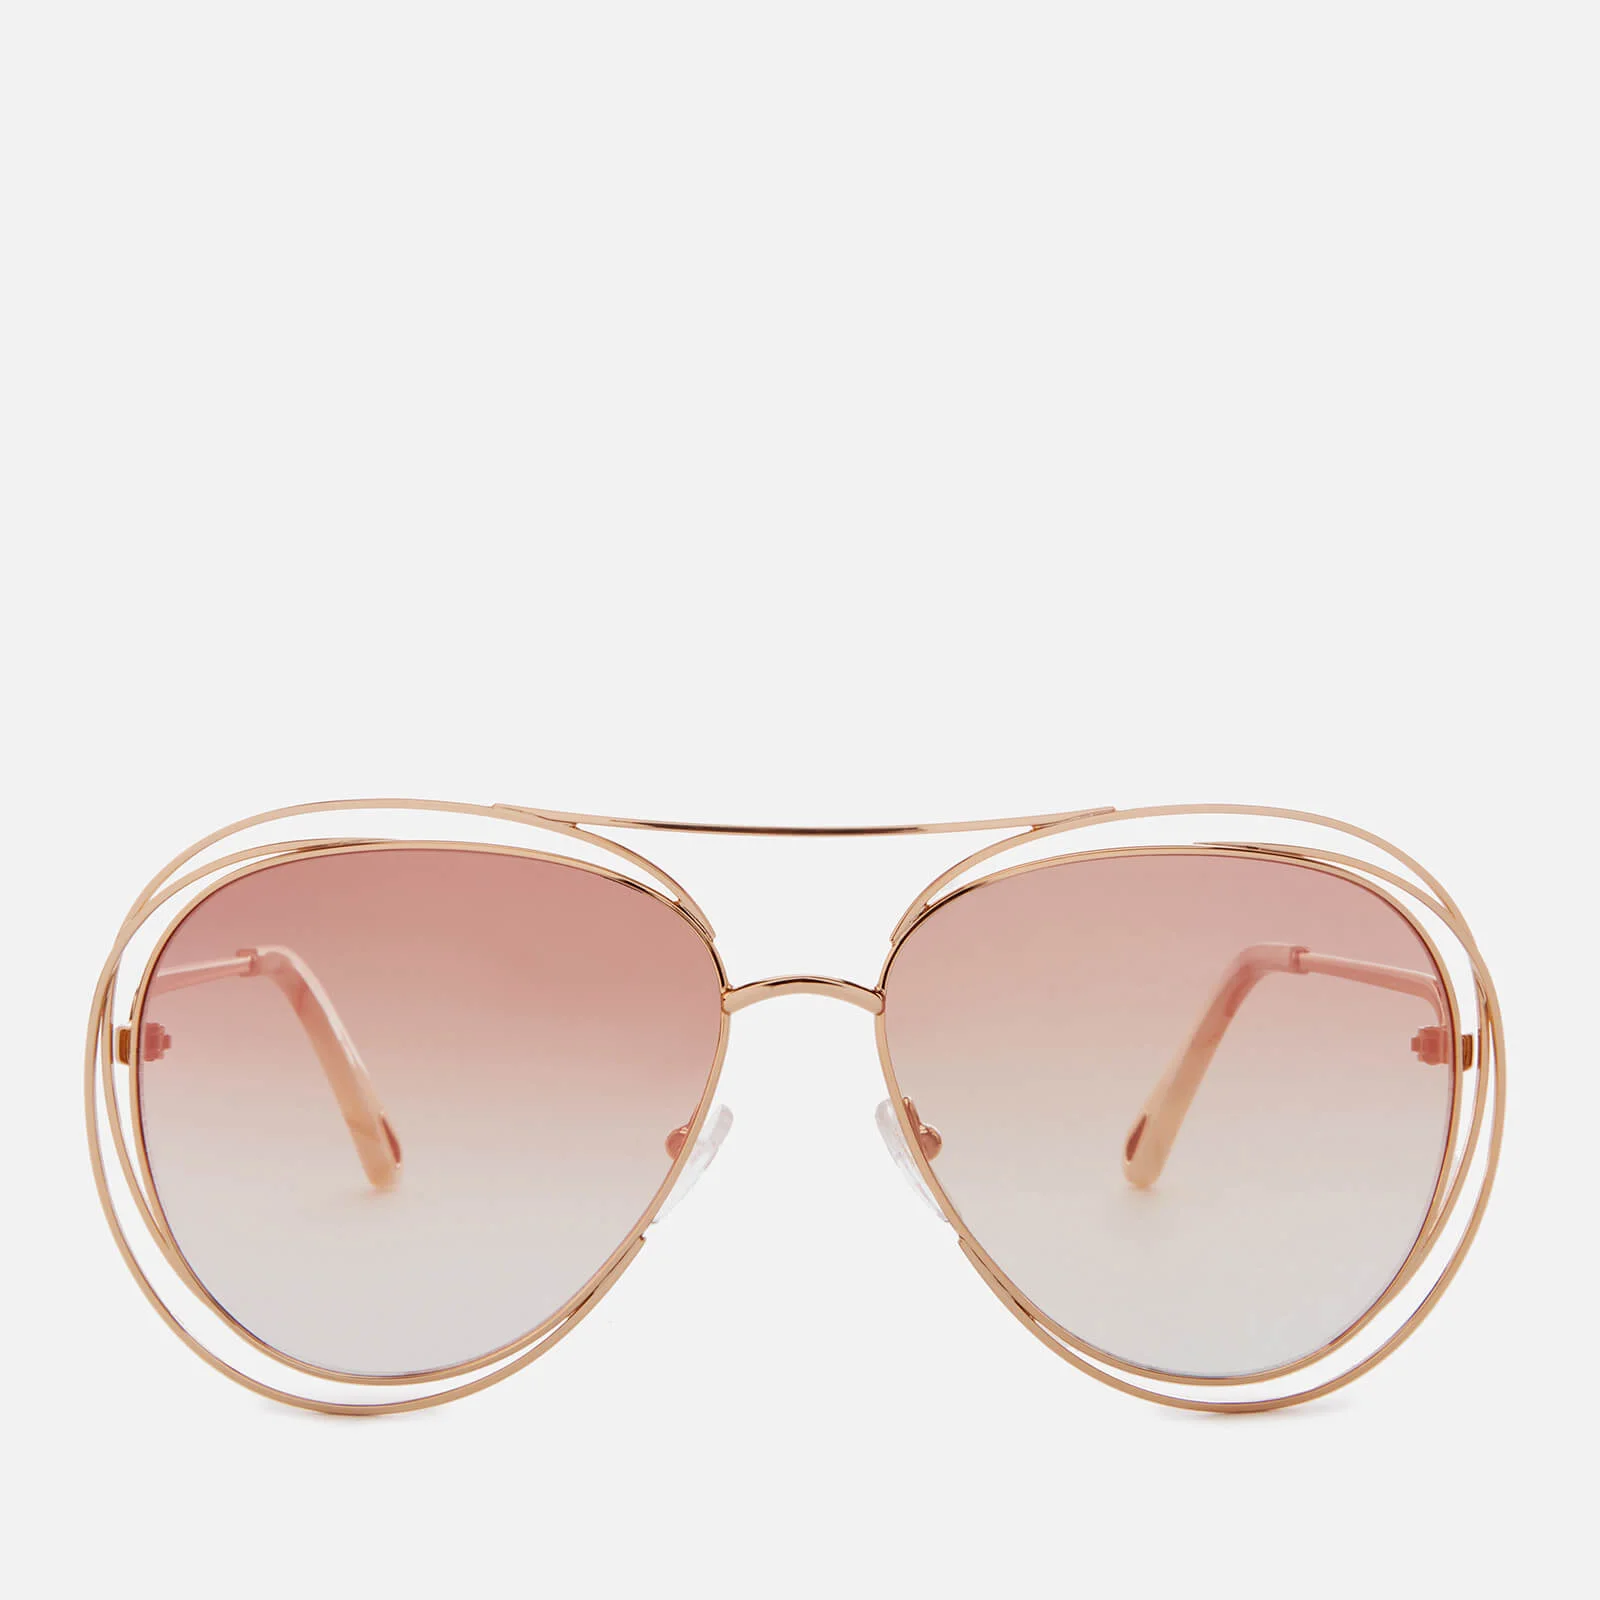 Chloe Women's Carlina Aviator Style Sunglasses - Gold/Marble Image 1